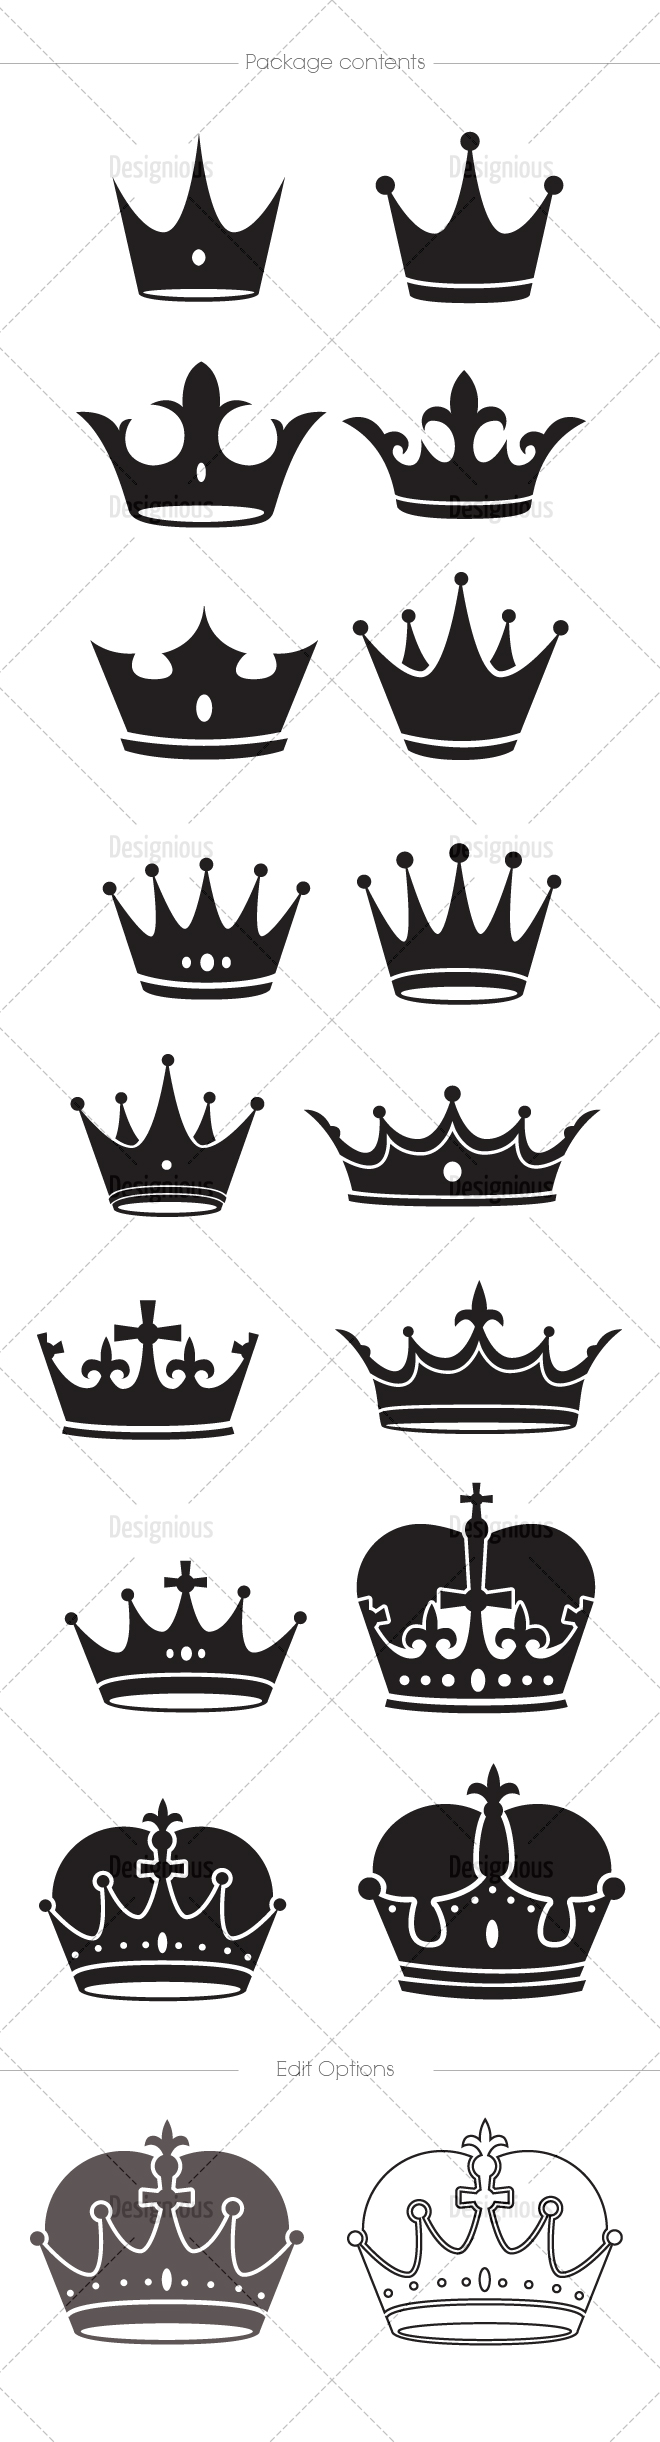 vector-crowns